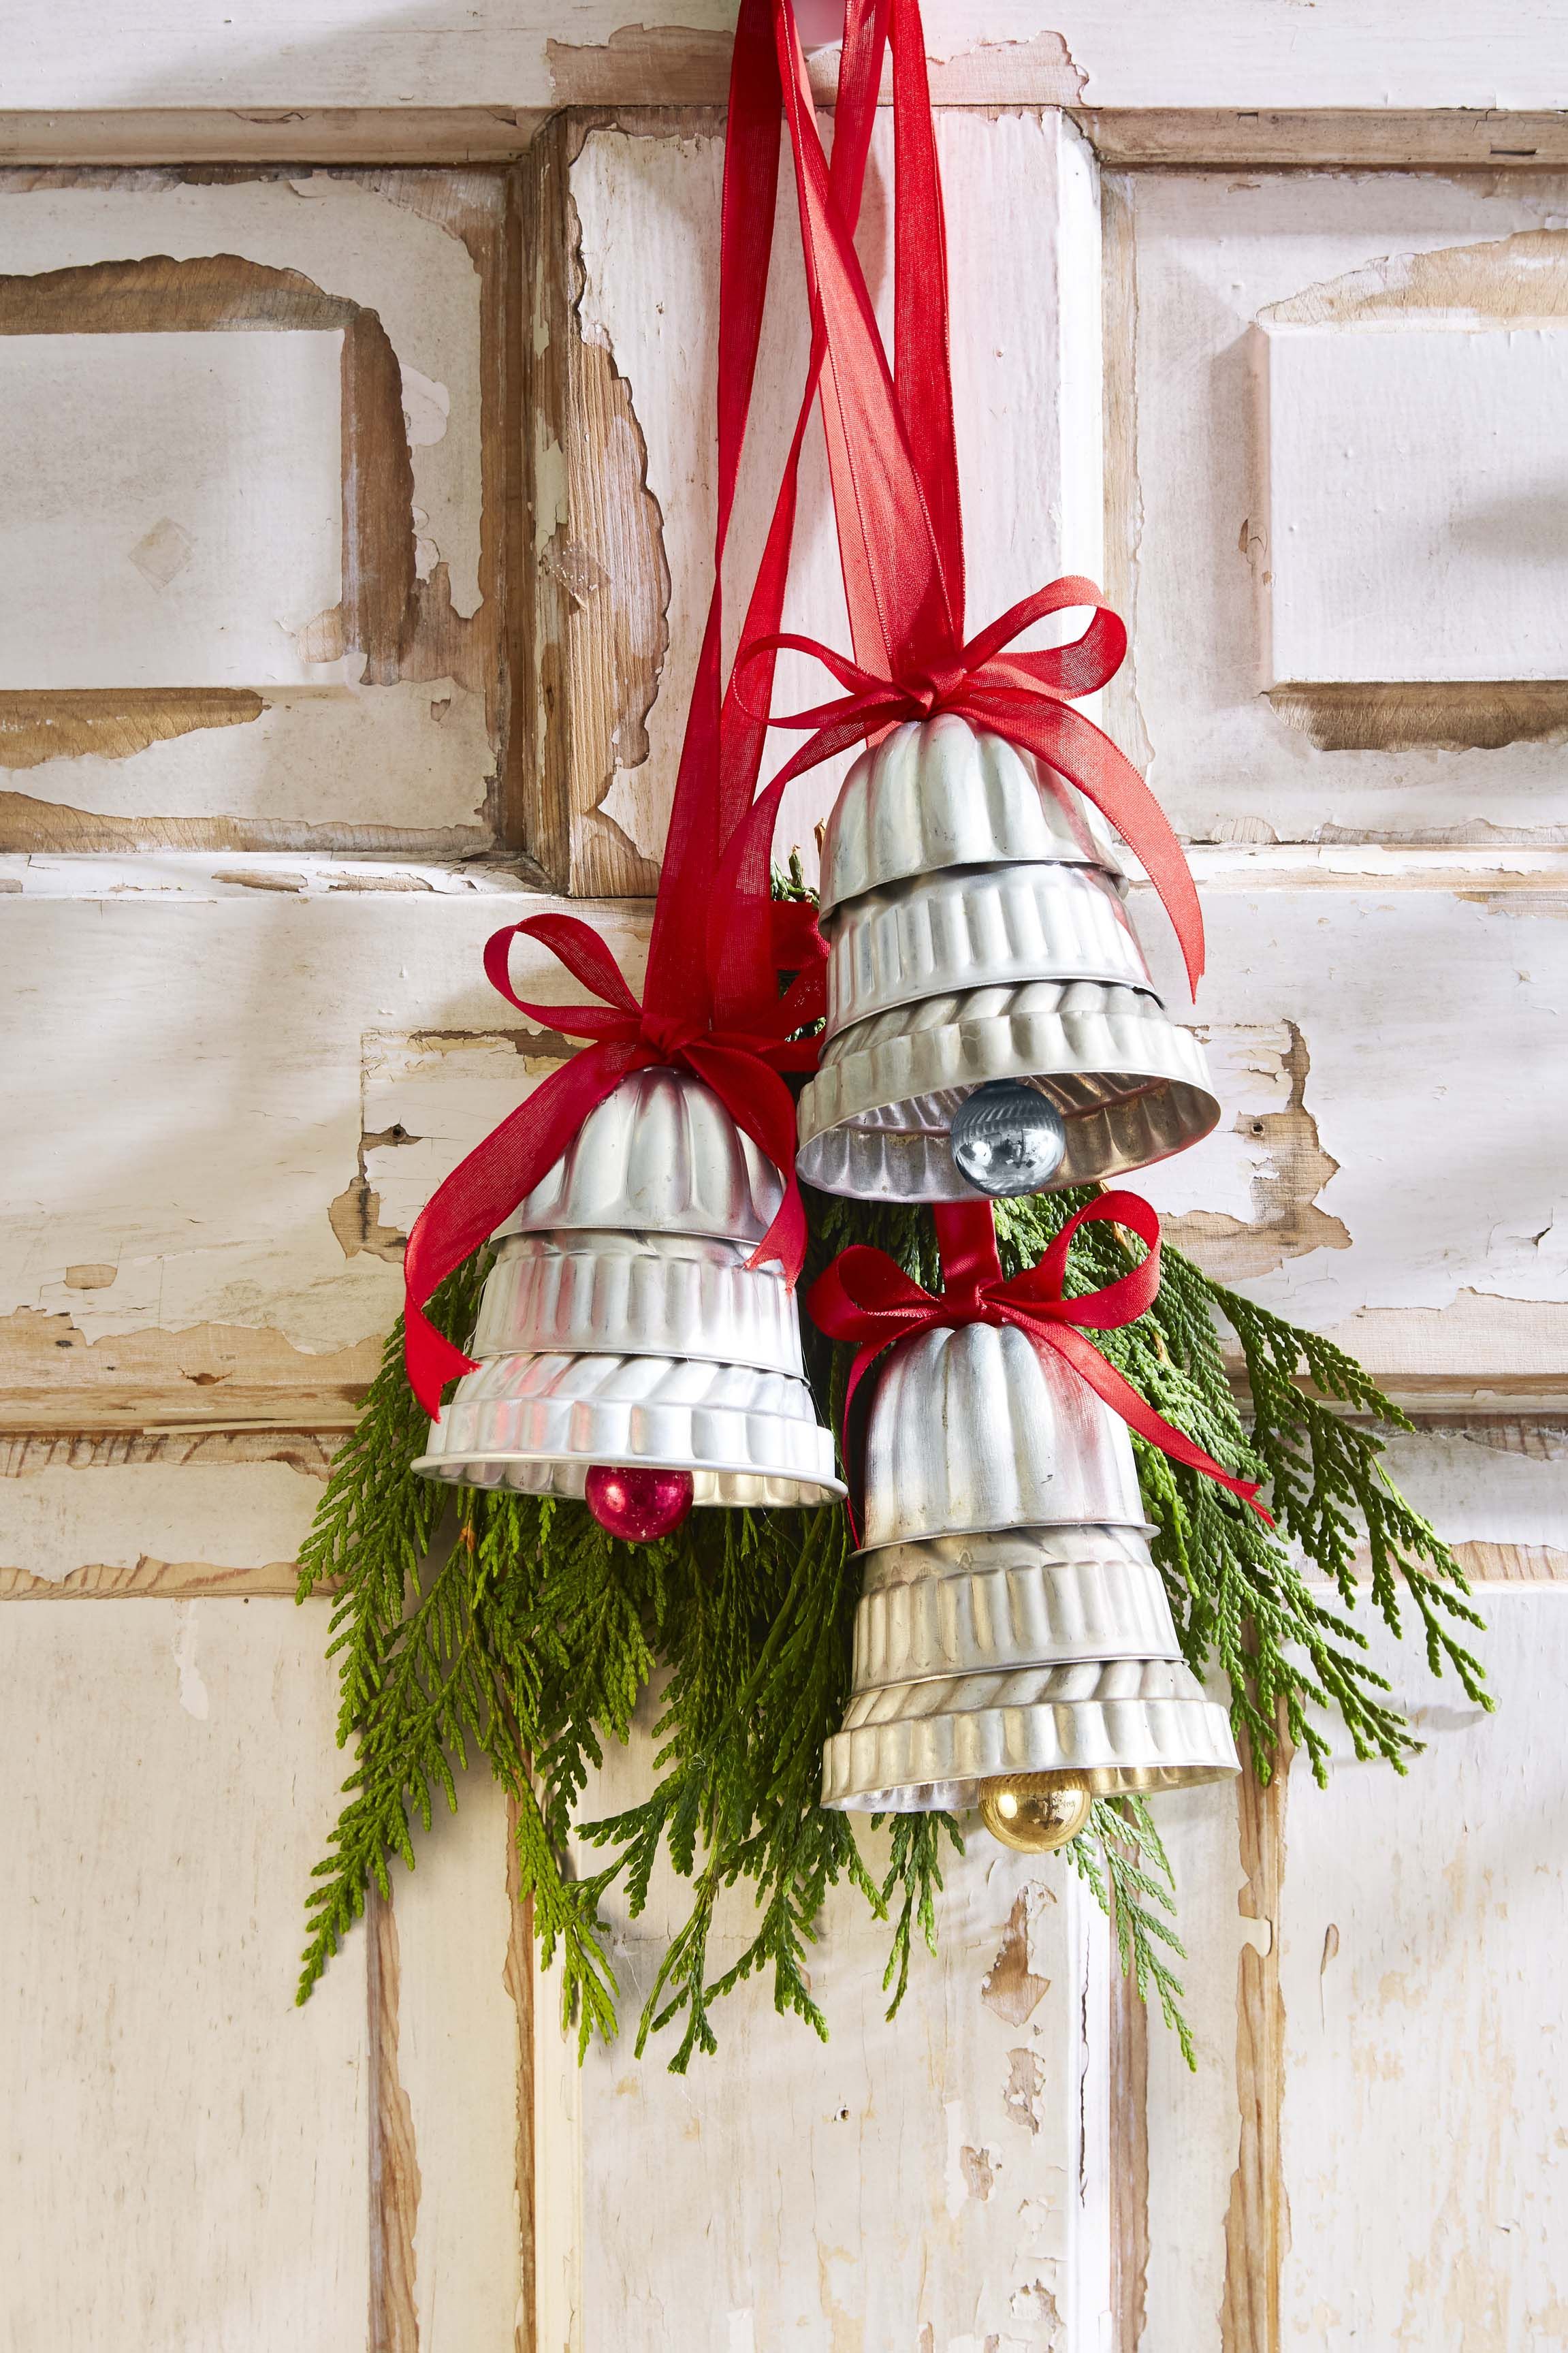 vintage Christmas Christmas bells silver trees silver bells holiday decor Vintage silver Christmas tree bells a pair vintage bells